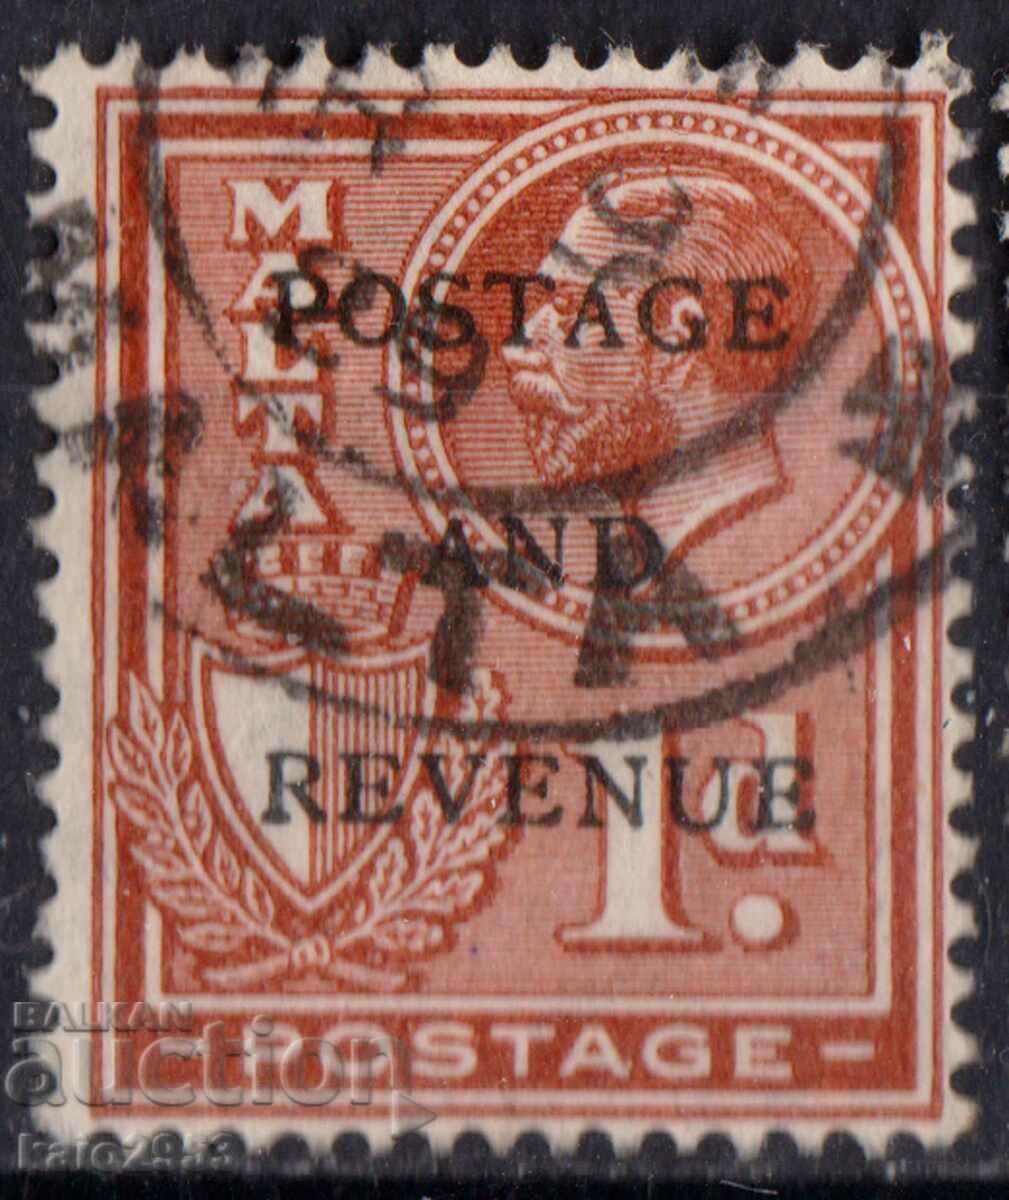 GB/Malta-1928-Regular KG V-Postage Revenue, γραμματόσημο